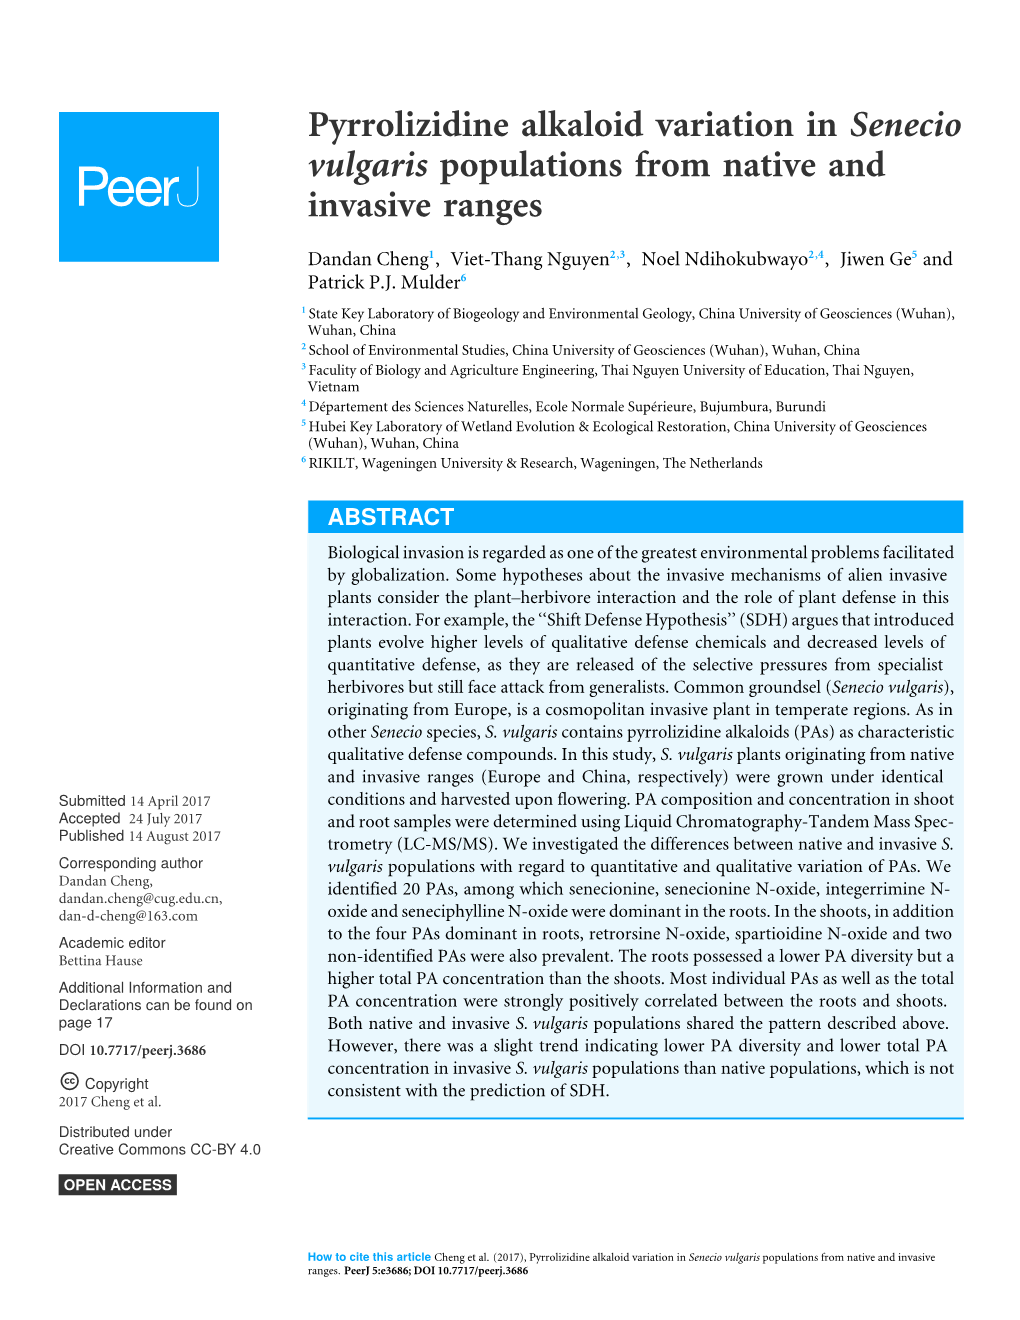 Pyrrolizidine Alkaloid Variation in Senecio Vulgaris Populations from Native and Invasive Ranges